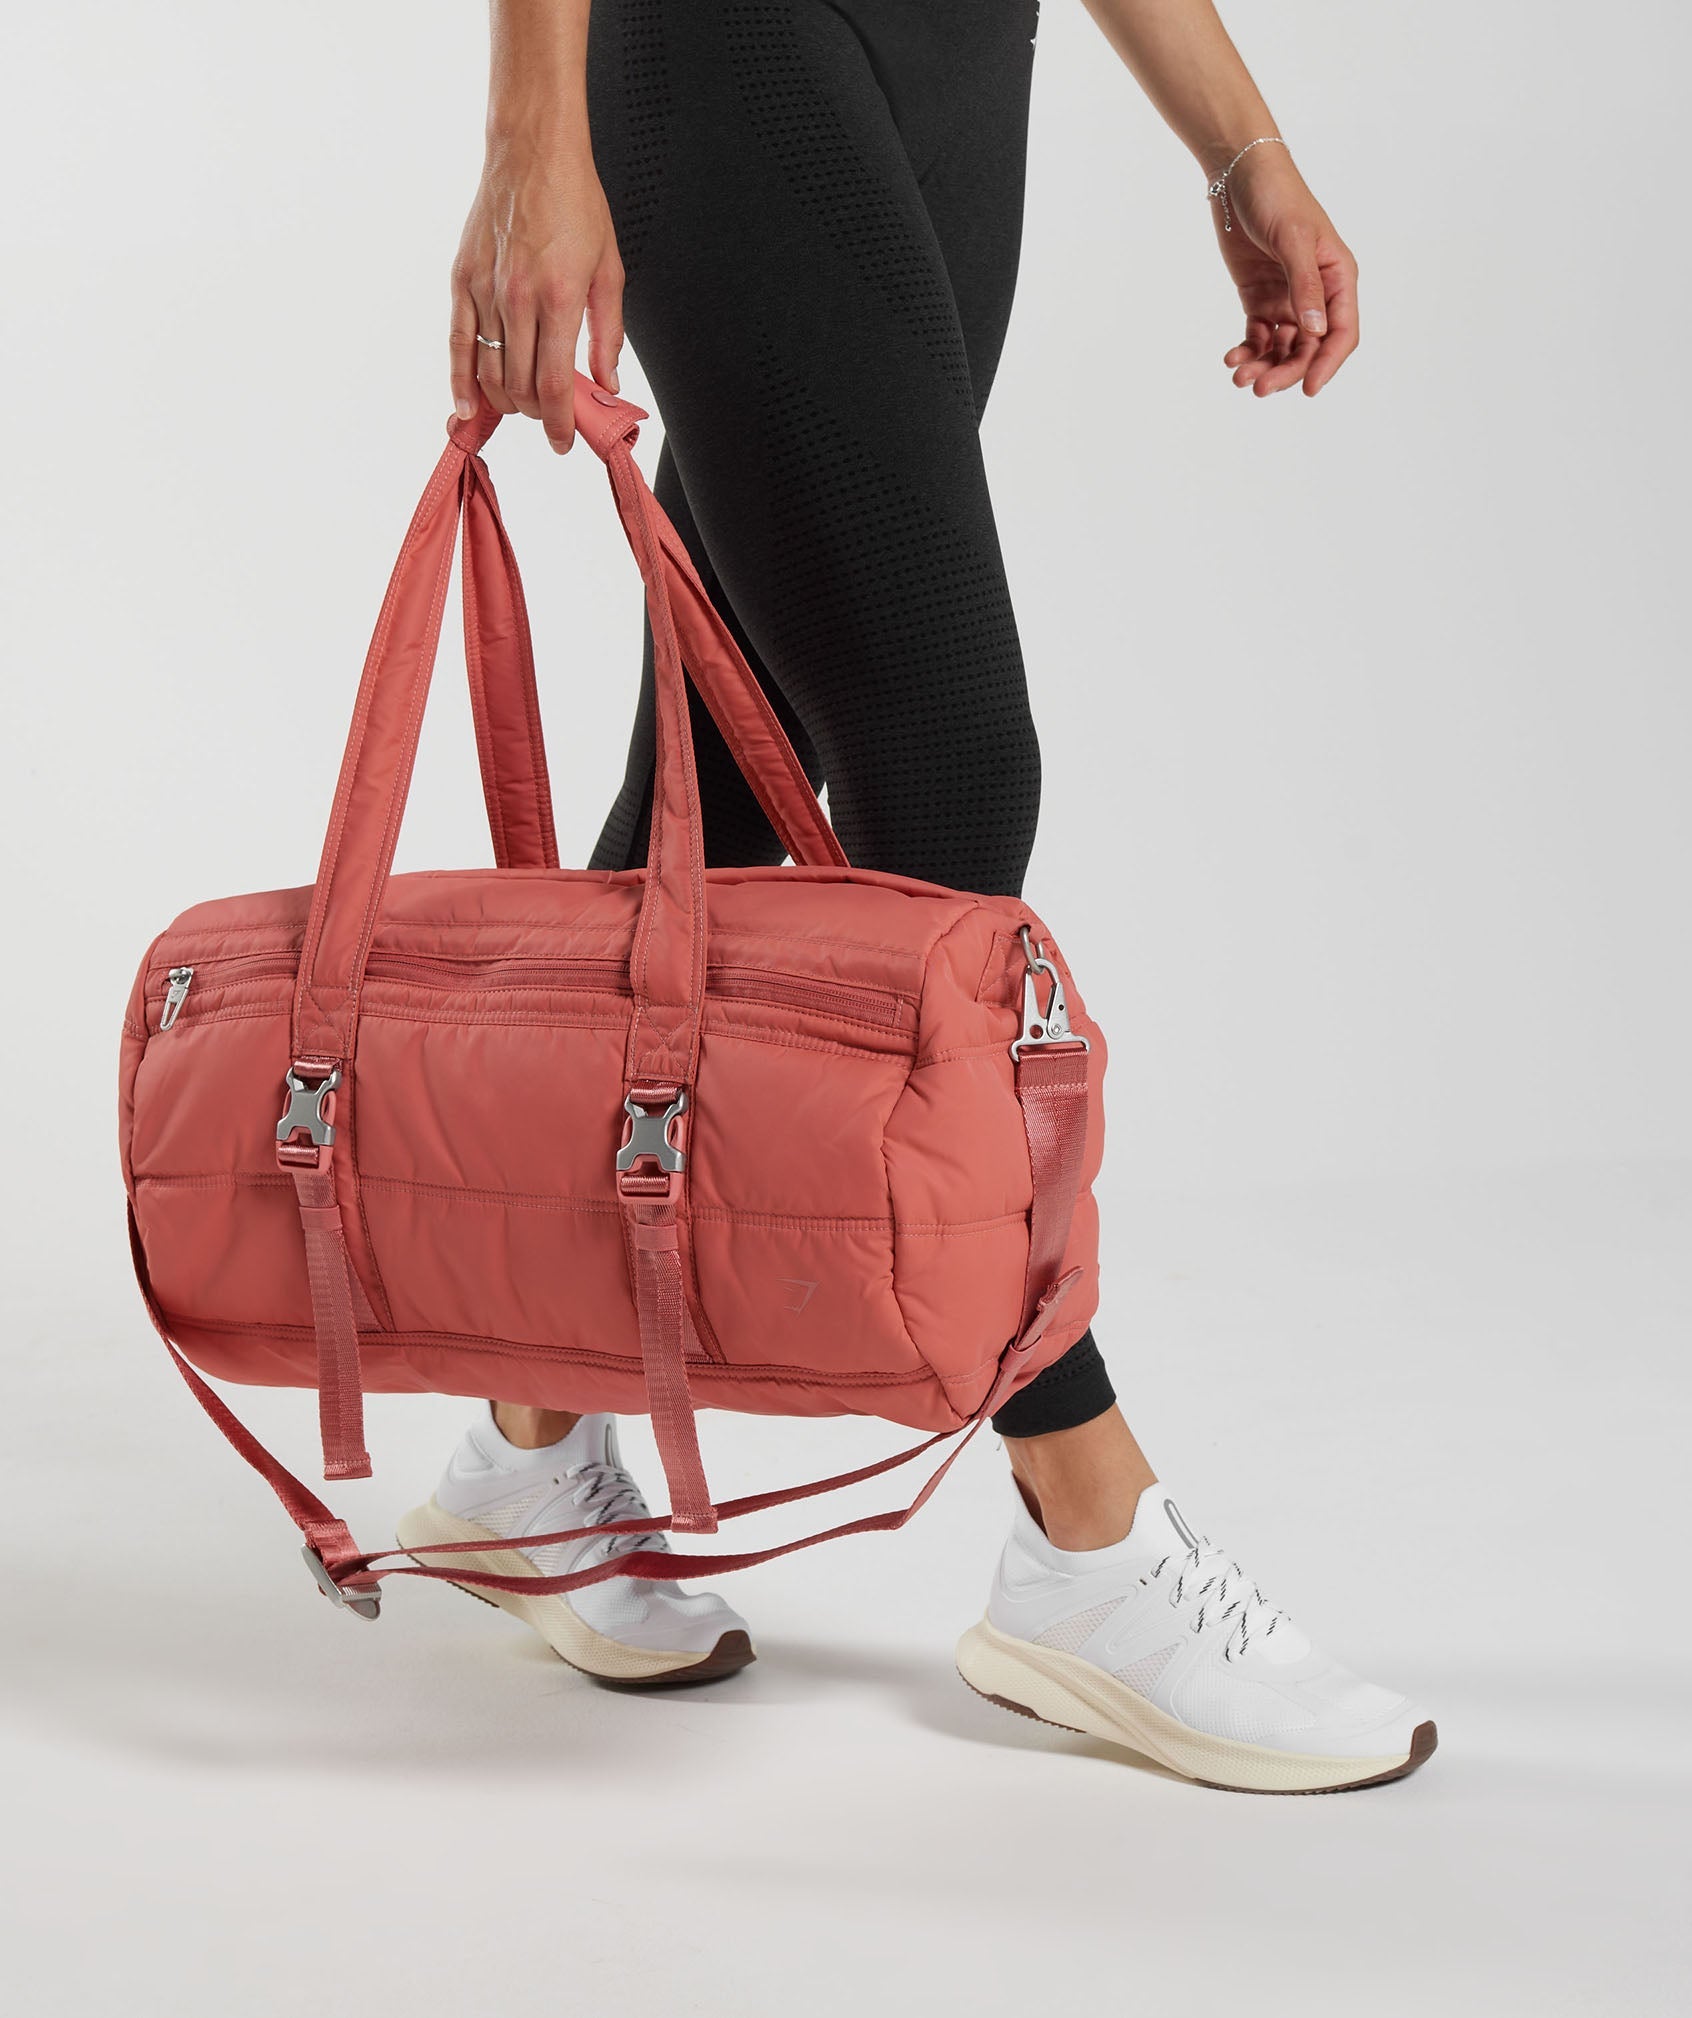 Premium Lifestyle Barrel Bag in Terracotta Pink - view 4